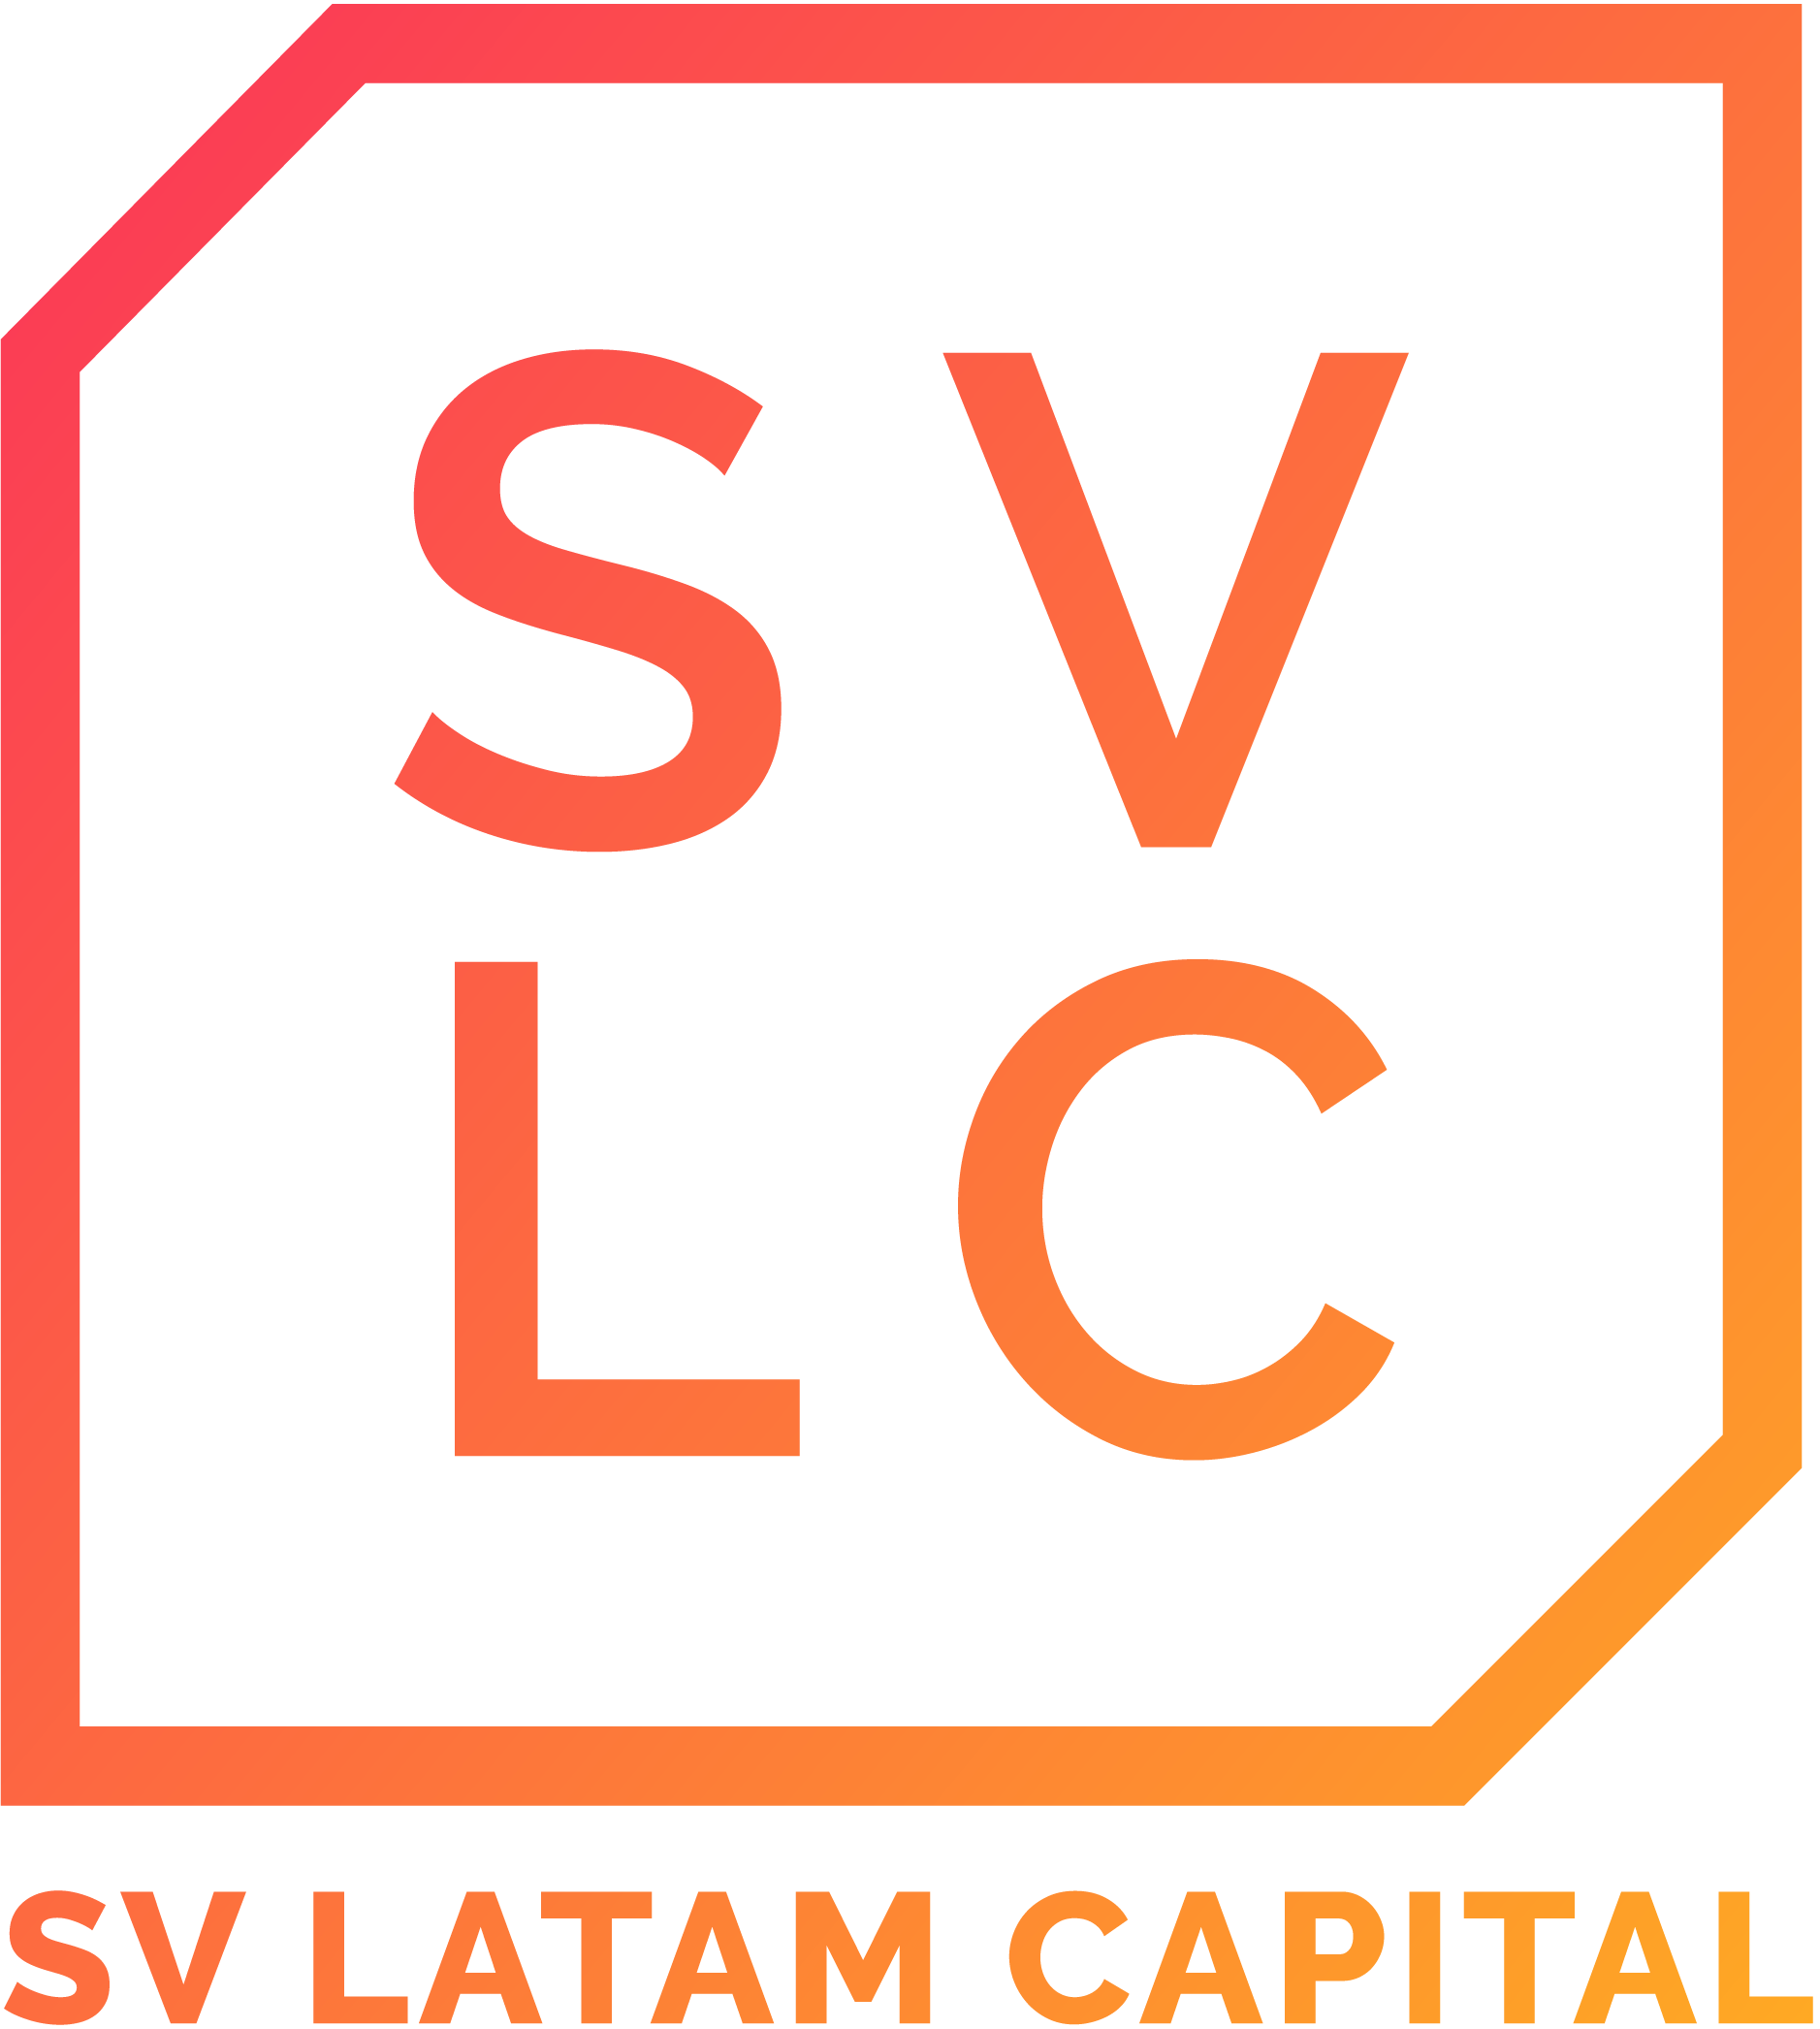 Silicon Valley Latam Capital logo